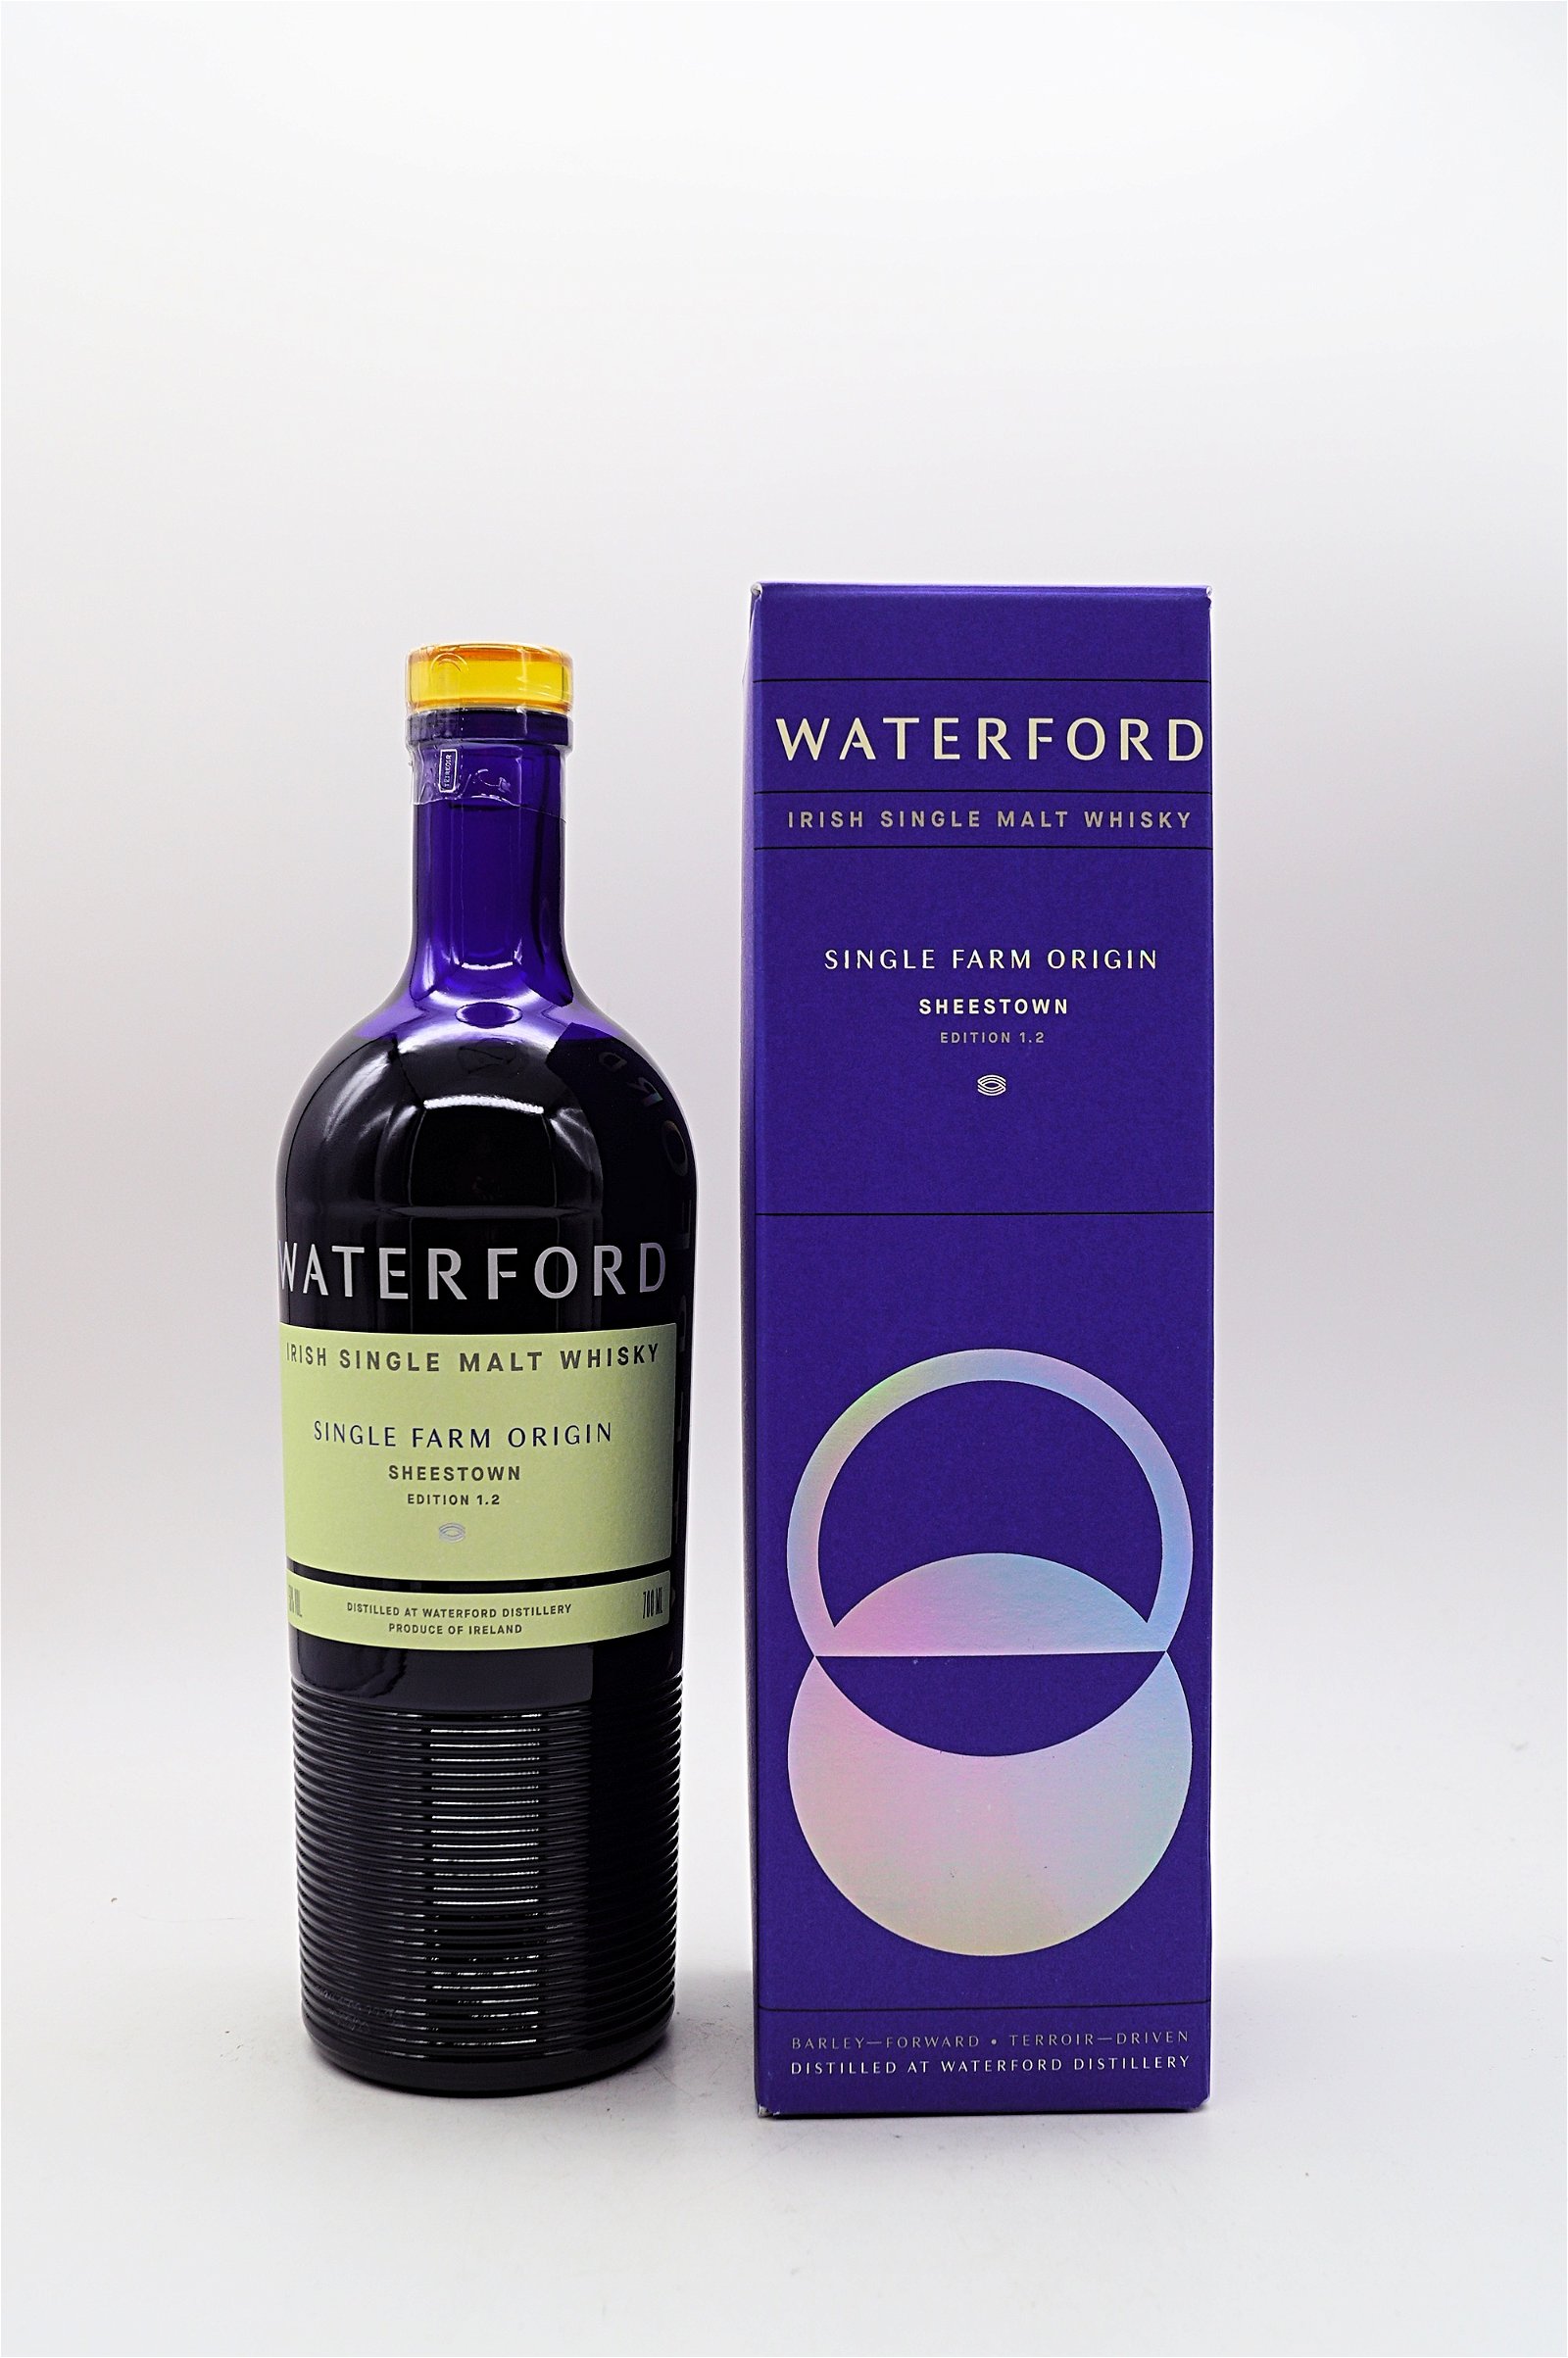 Waterford Sheestown Edition 1.2 Single Farm Origins Irish Single Malt Whisky